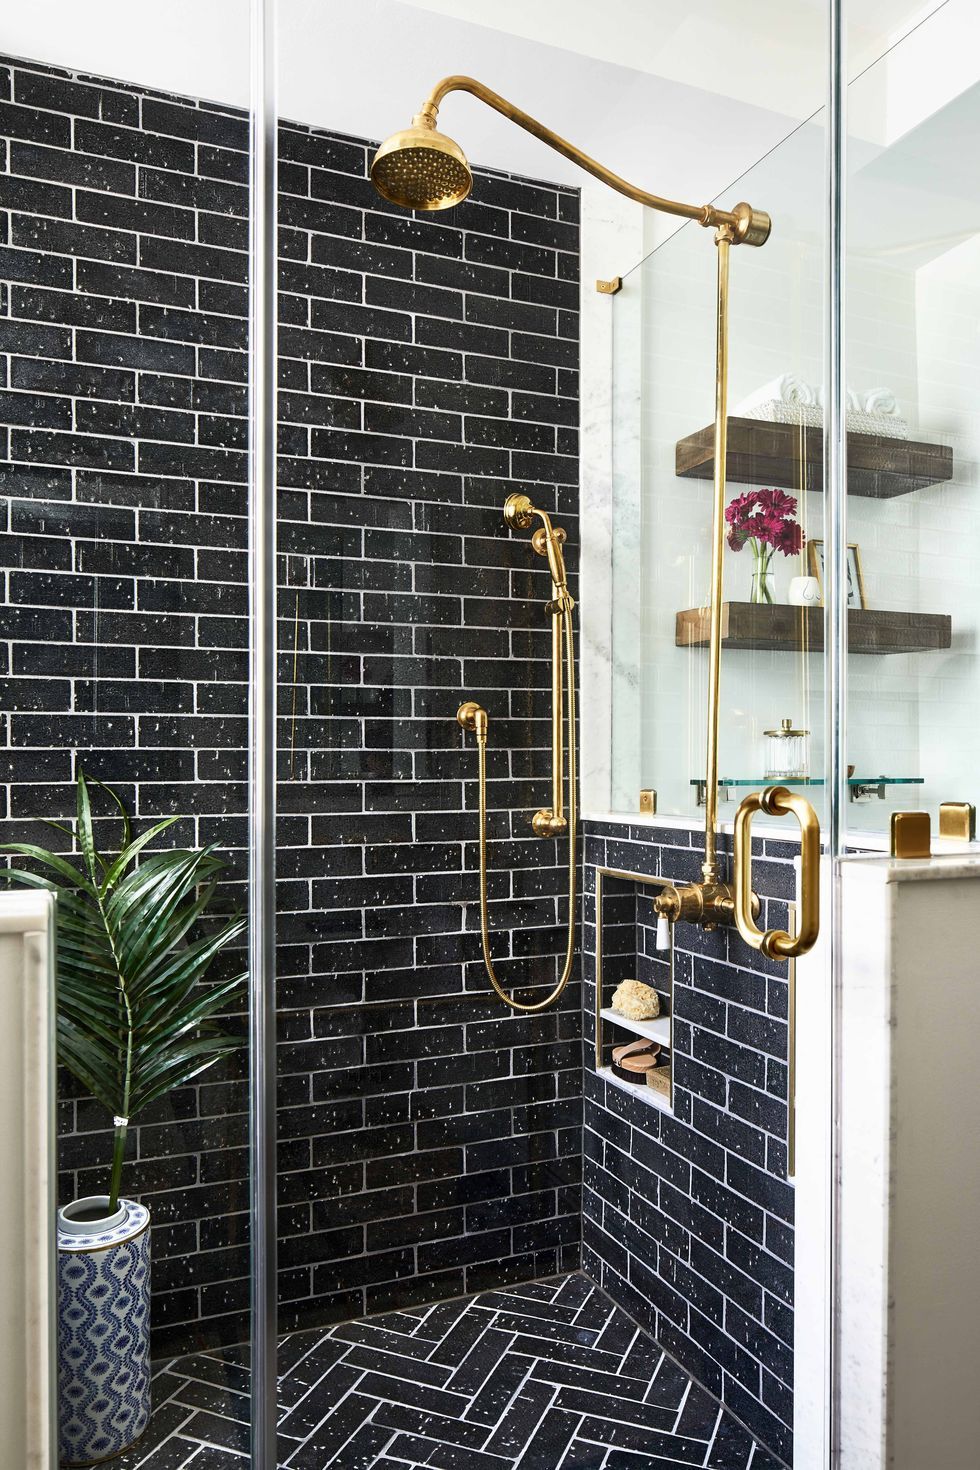 Creative Bathroom Tile Design Ideas, Bathroom Tiles Design Images